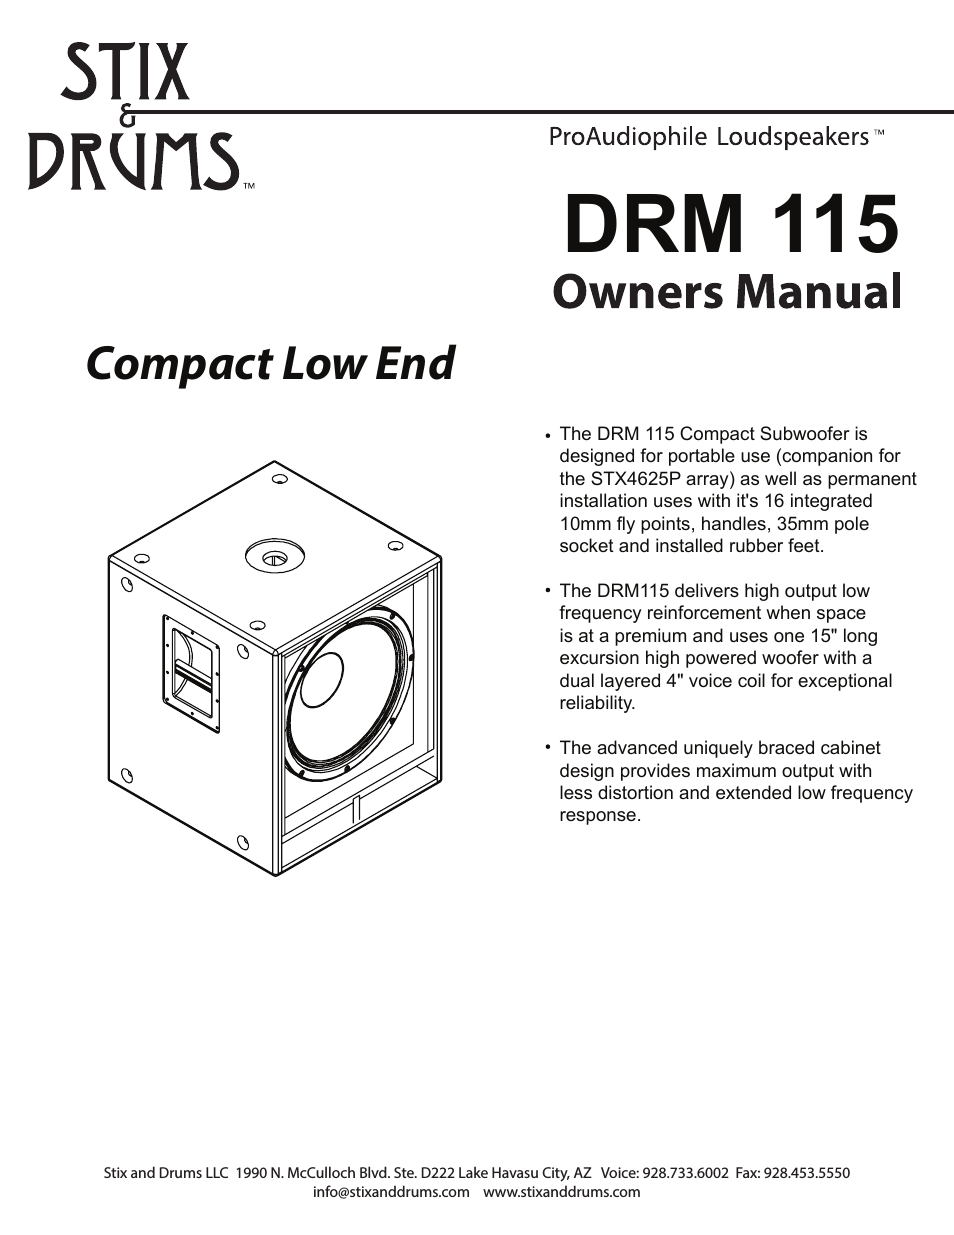 DRM 115